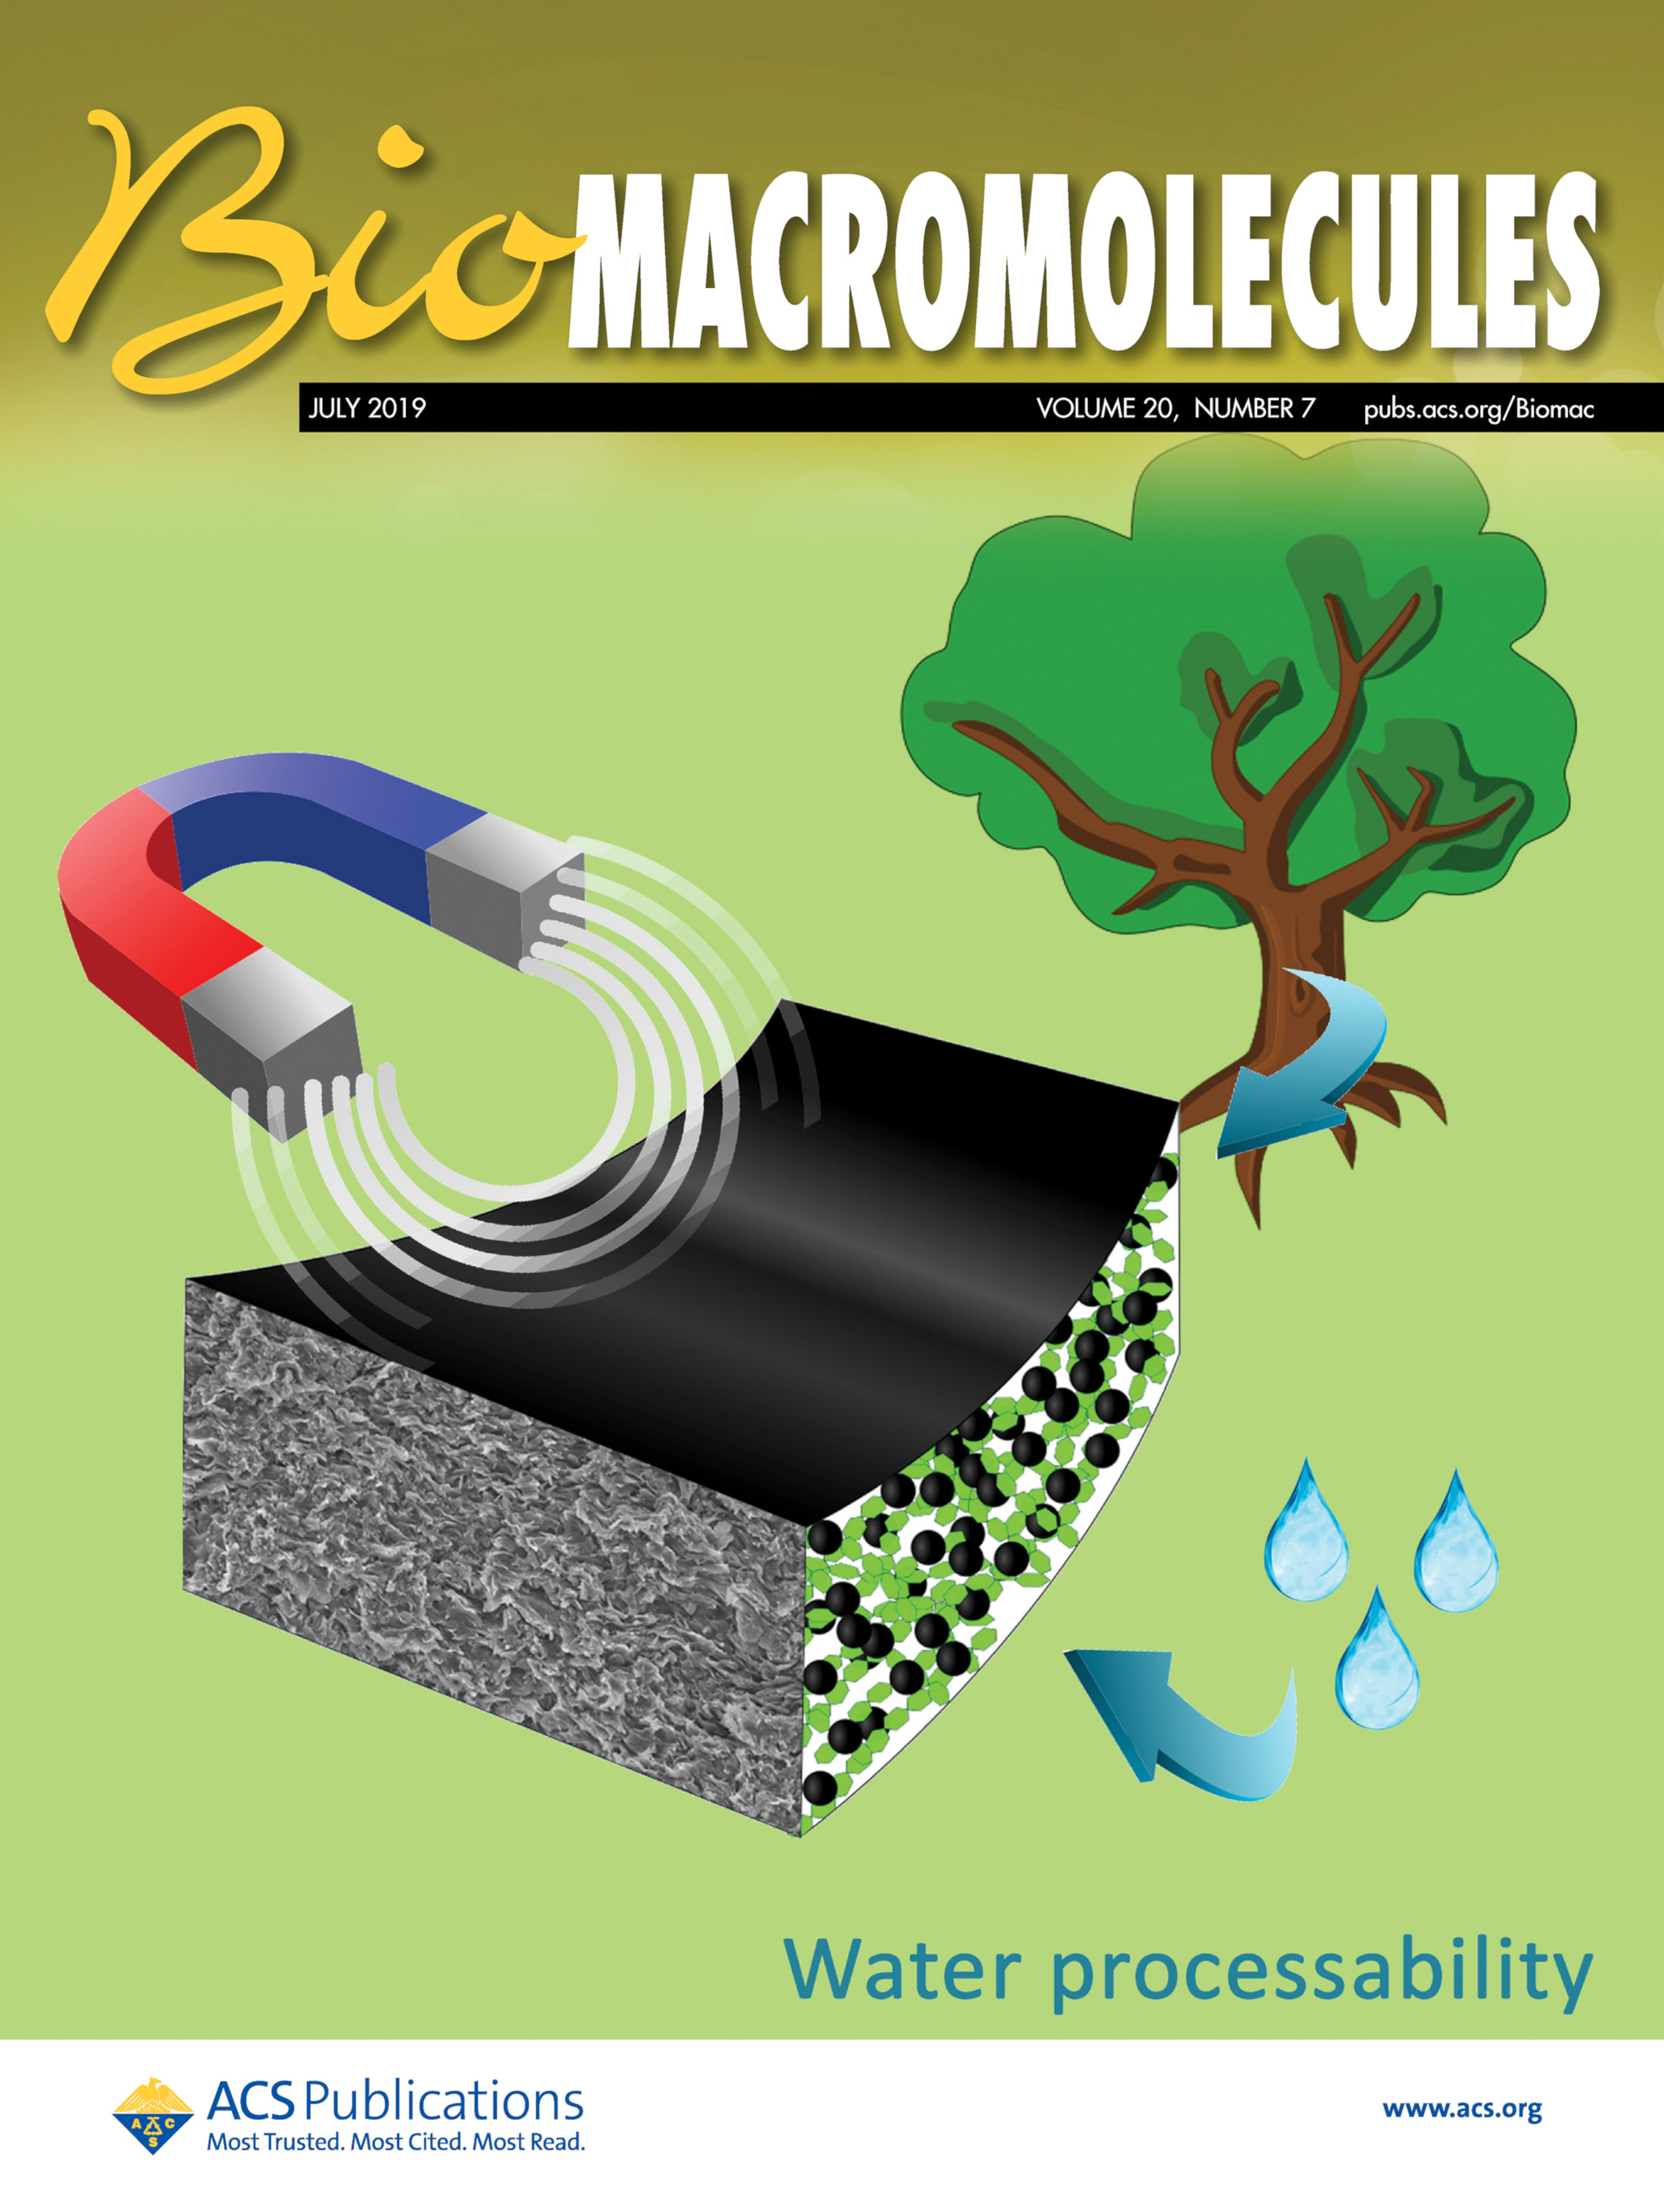 New cover on Biomacromolecules